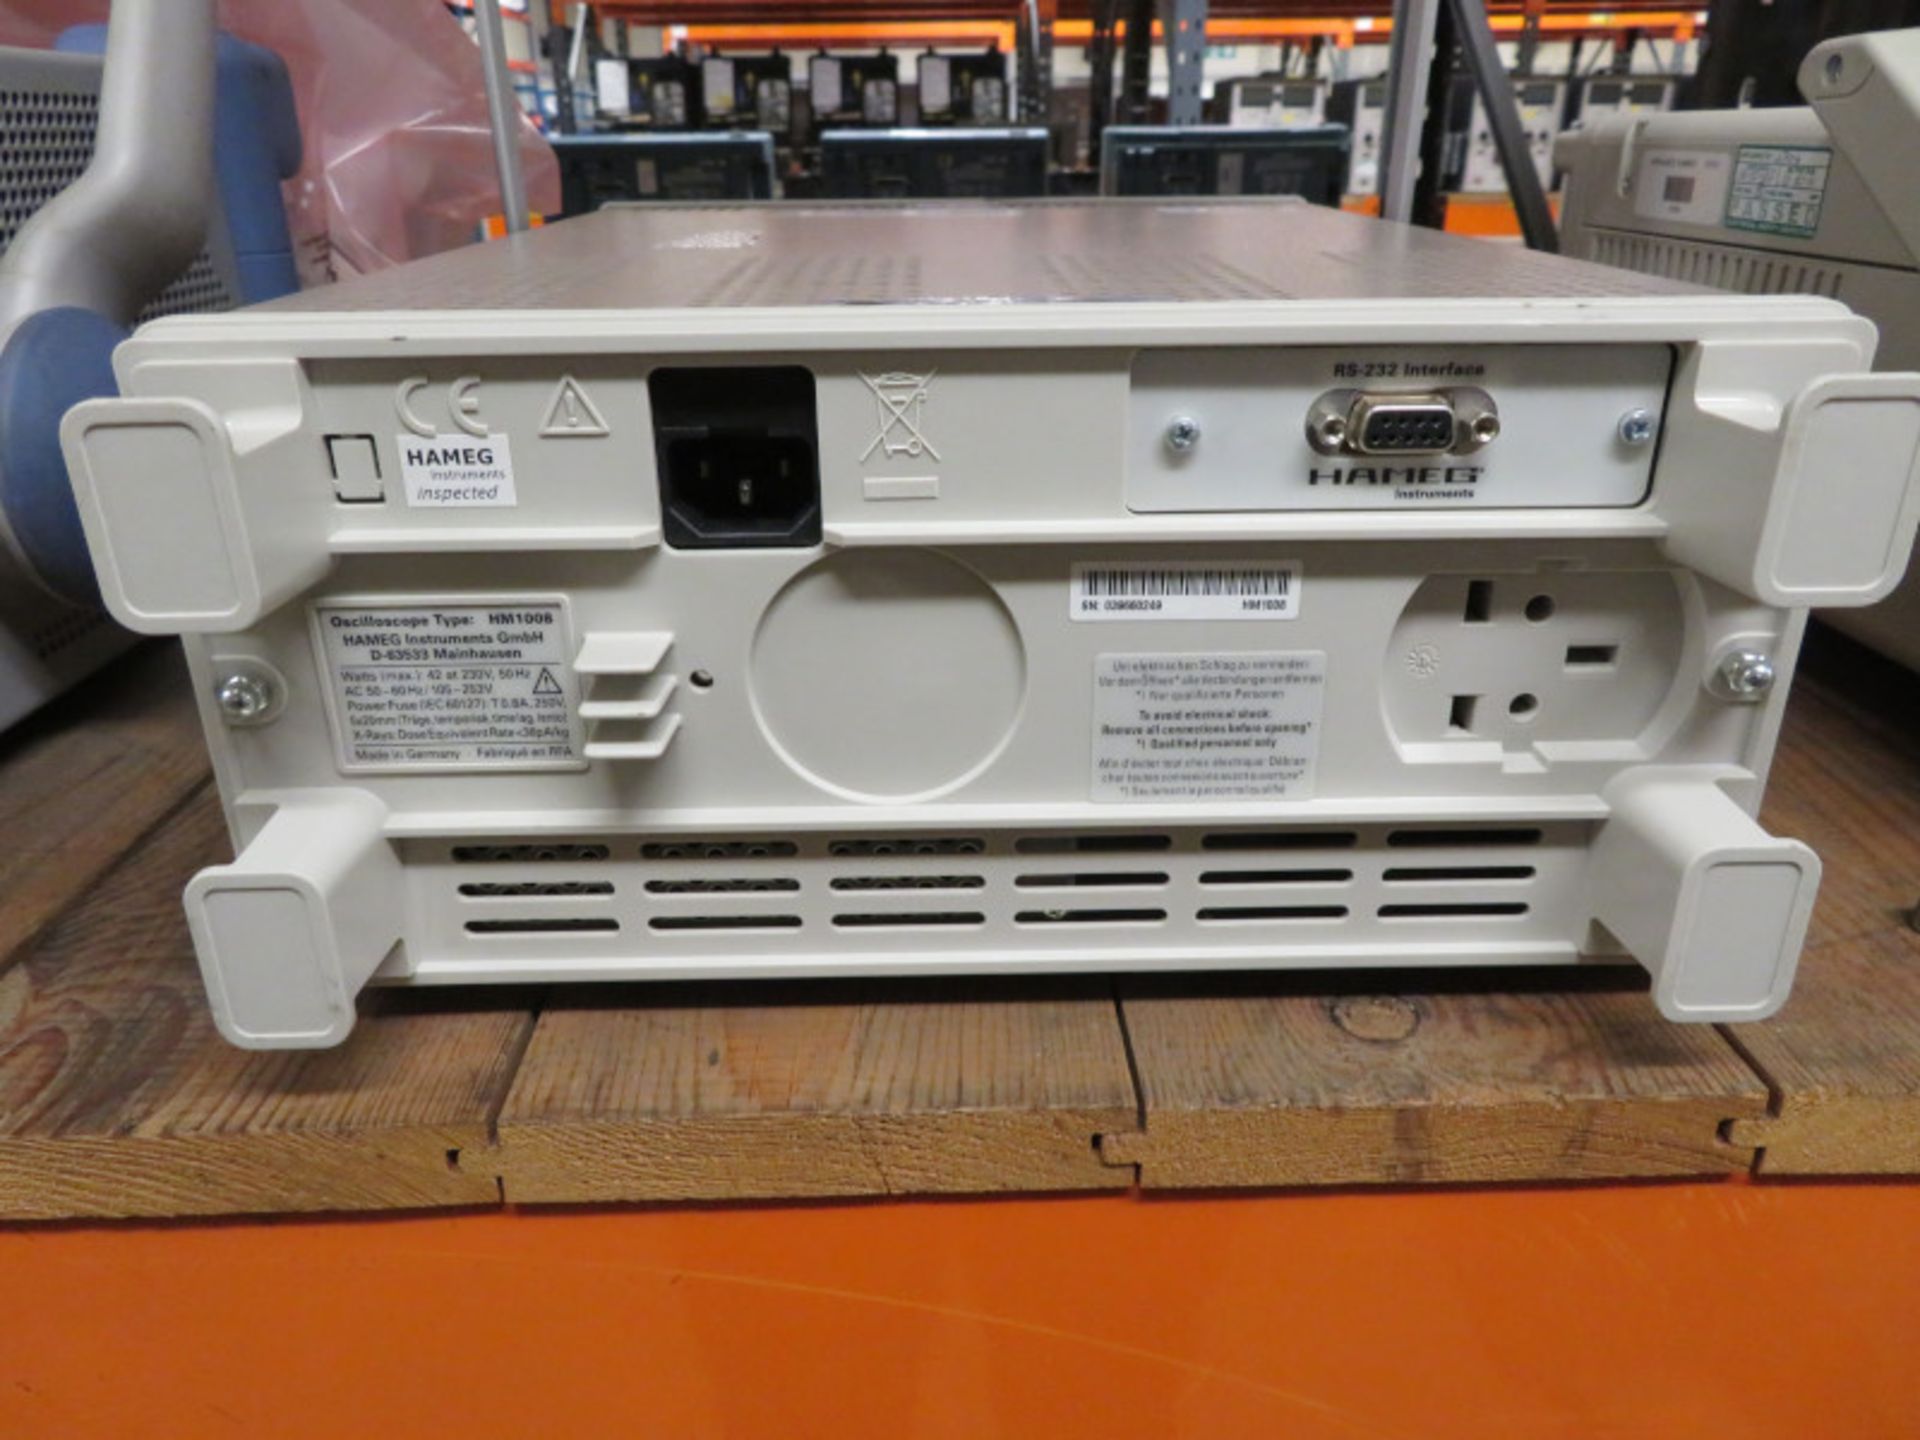 Hameg Instruments HM1008 Analog Digital Oscilloscope 1 GSa - 1MB 100MHz (No Power Cable) - Image 3 of 3